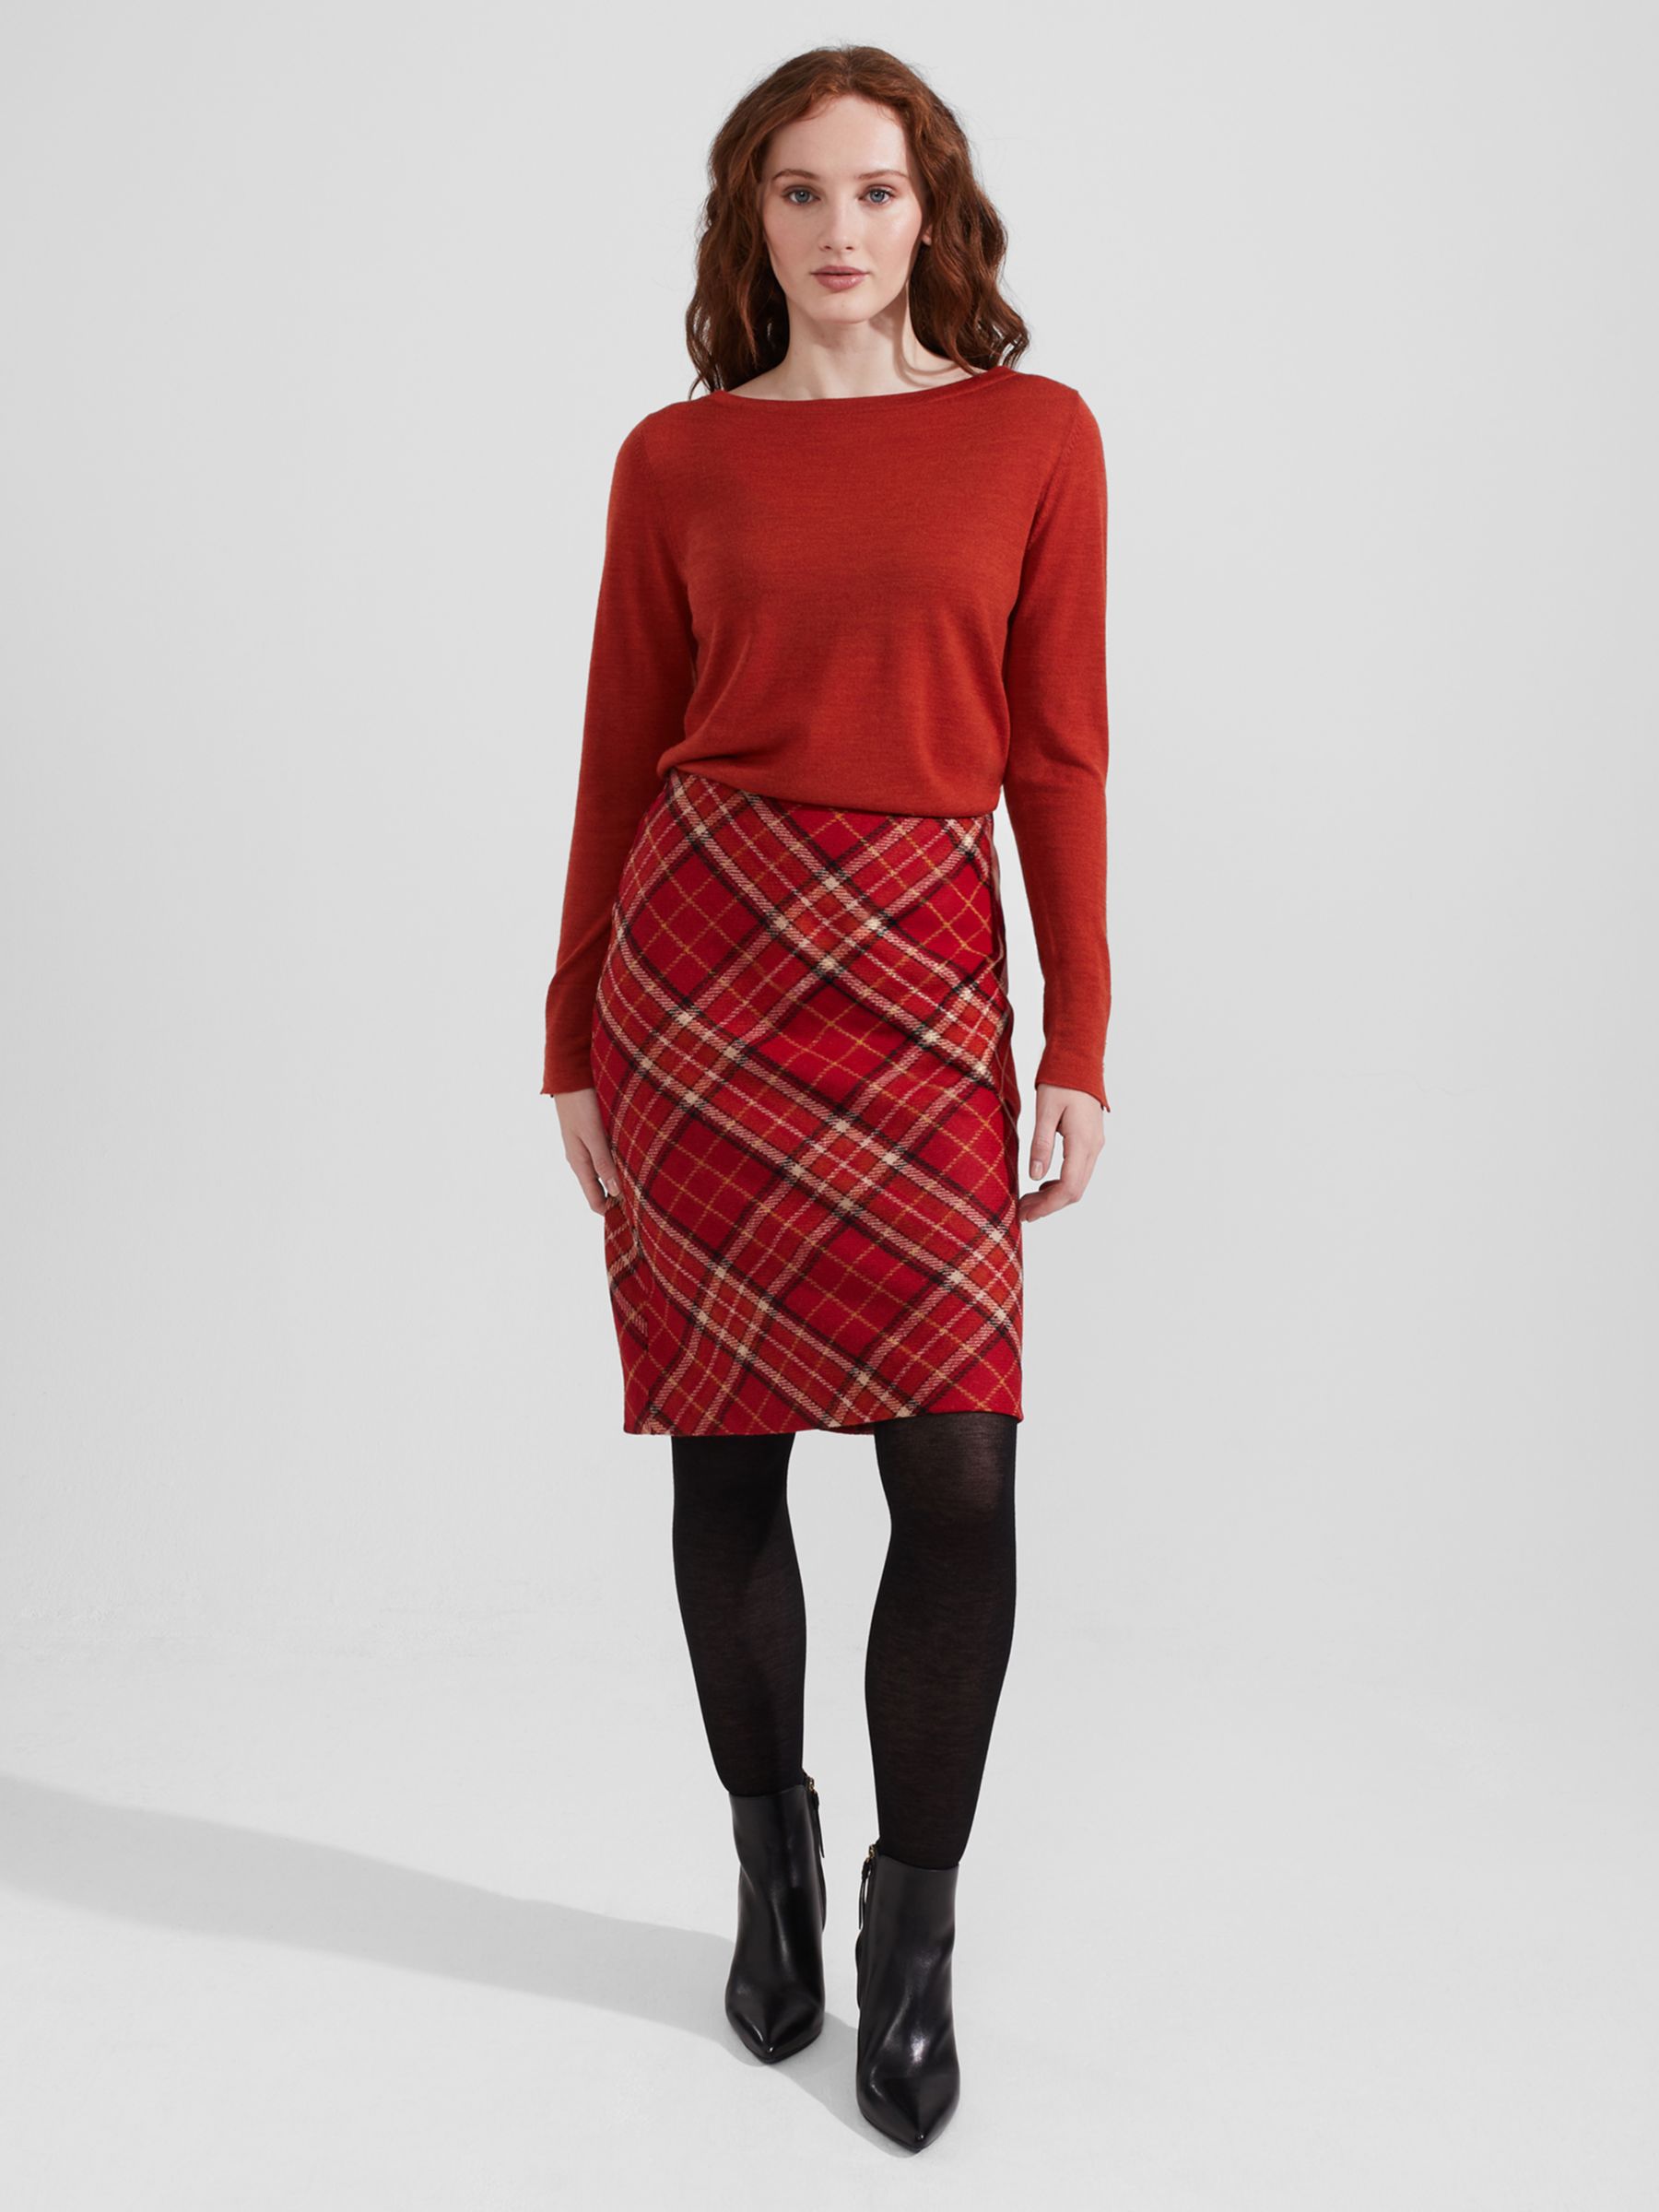 Hobbs Daphne Wool Pencil Skirt, Red/Multi at John Lewis & Partners